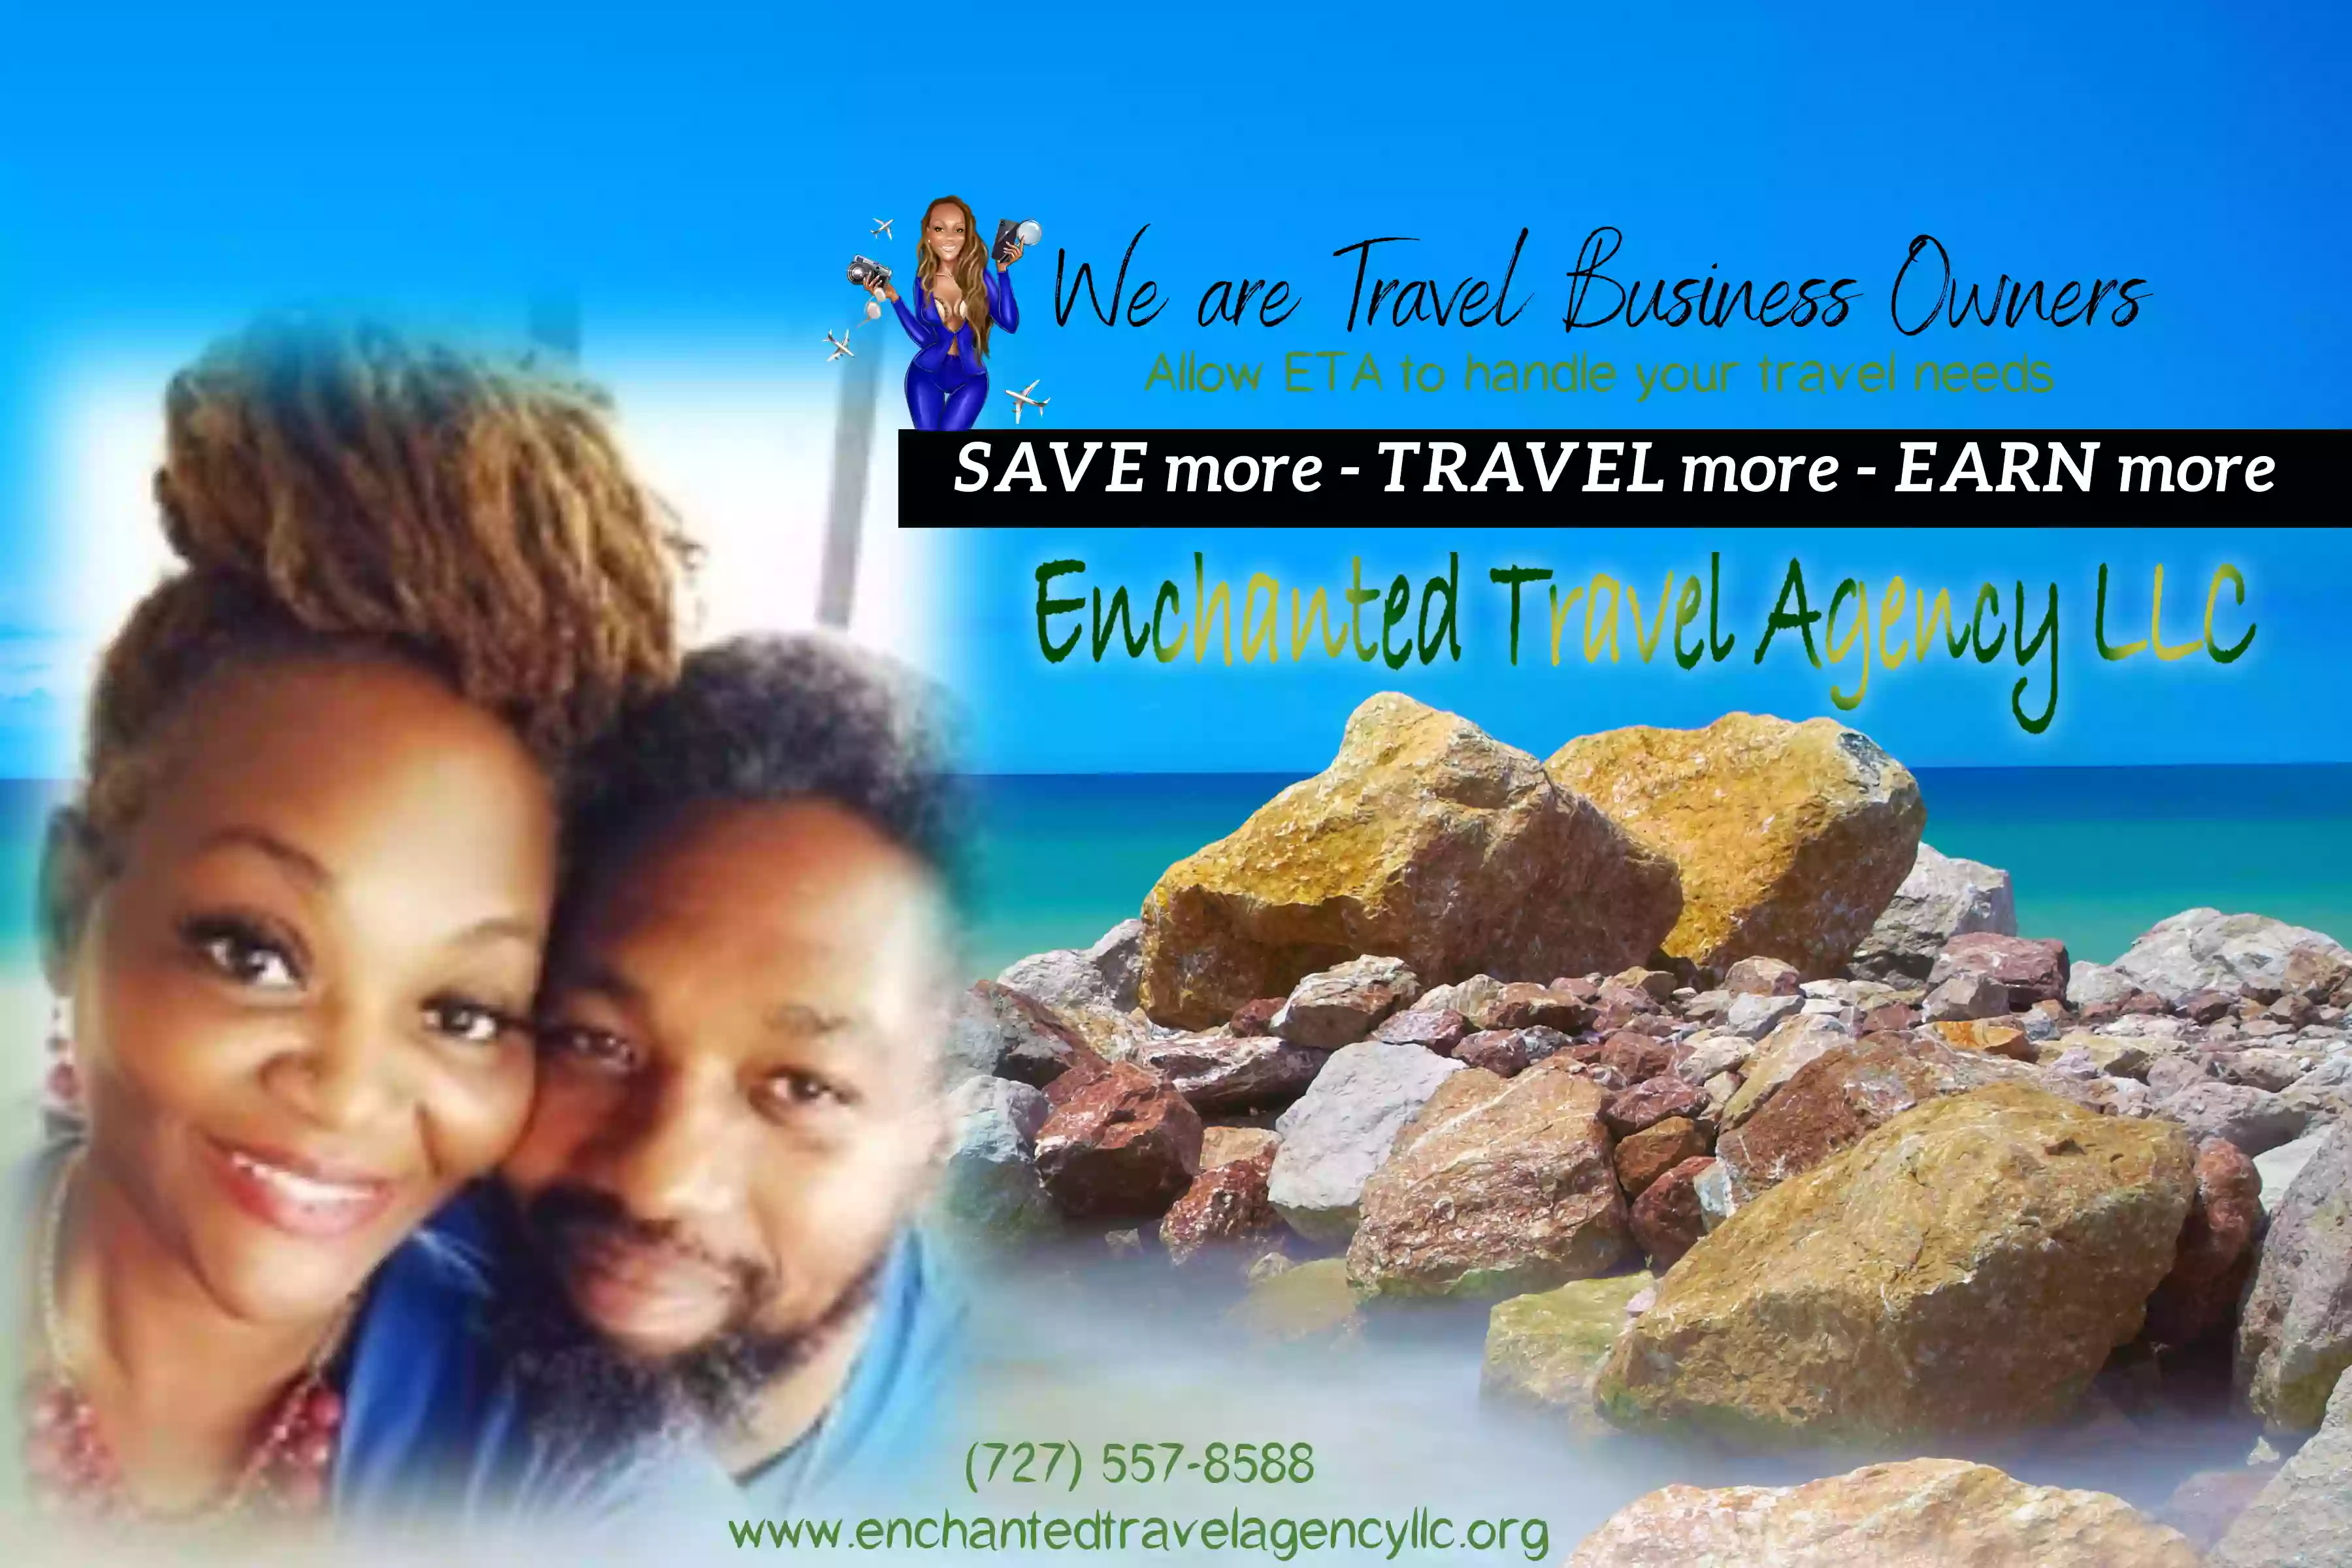 Enchanted Travel Agency LLC